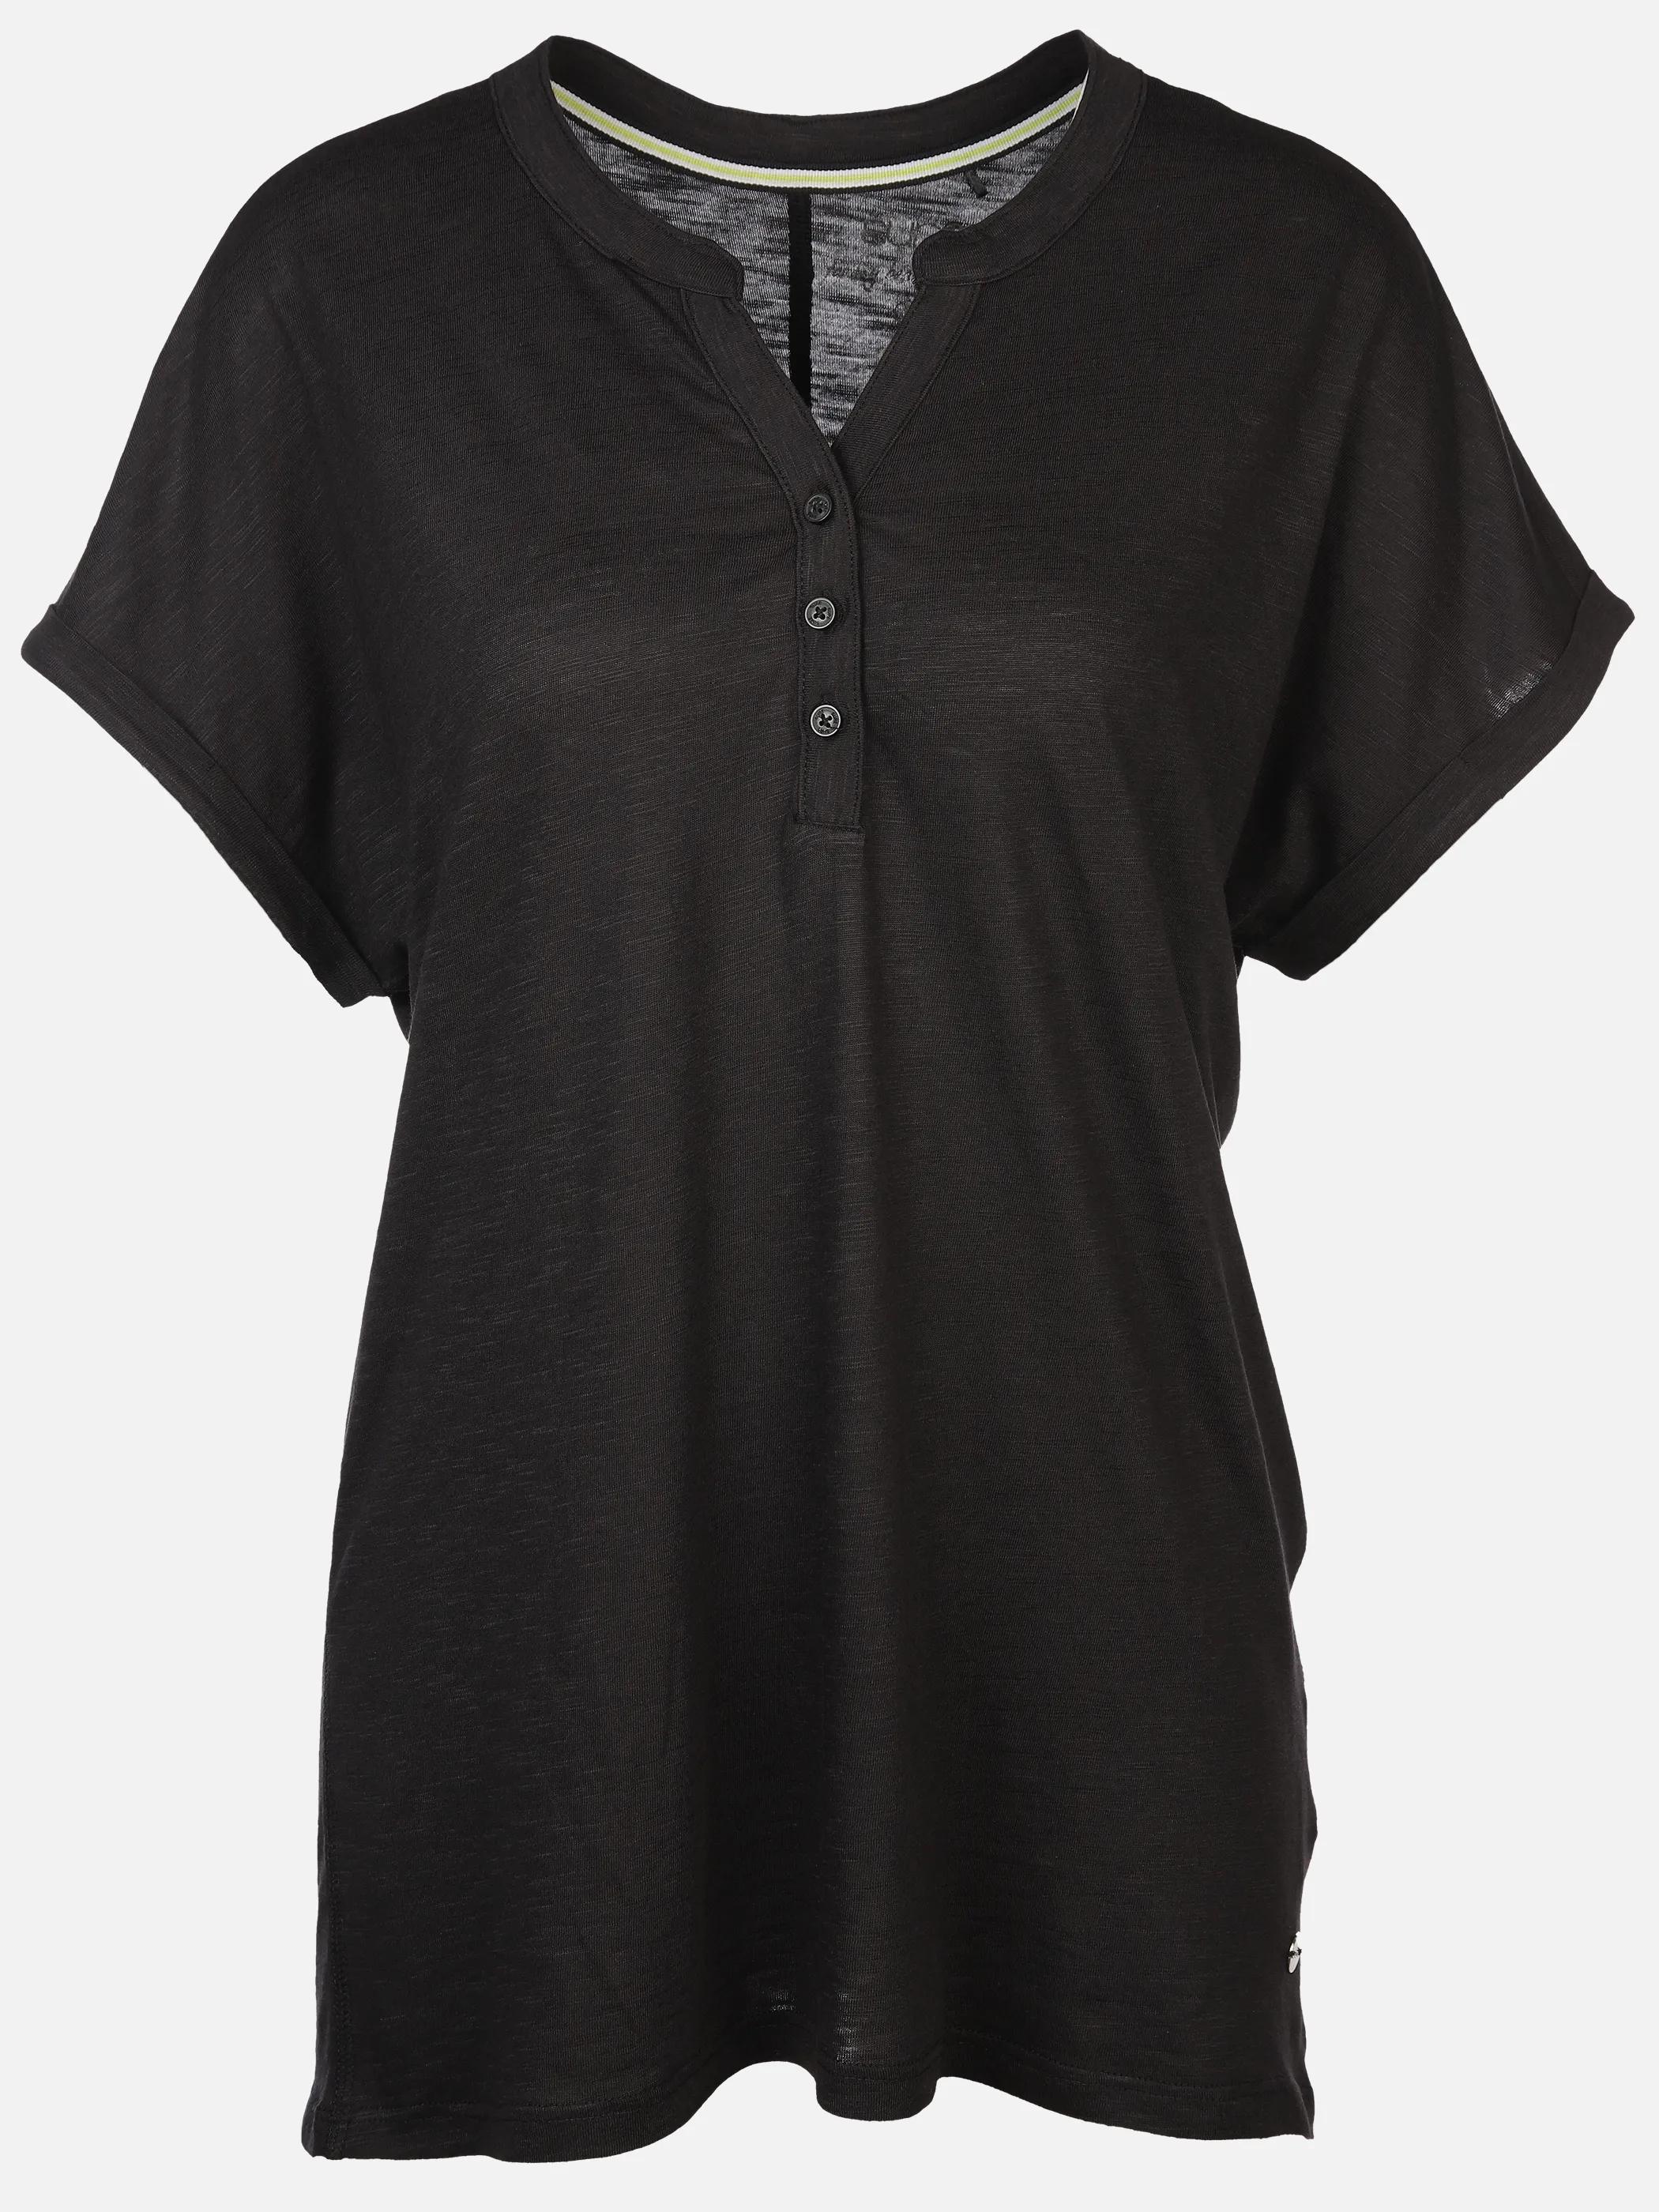 Sure Da-Jersey-T-Shirt Schwarz 890358 BLACK 1